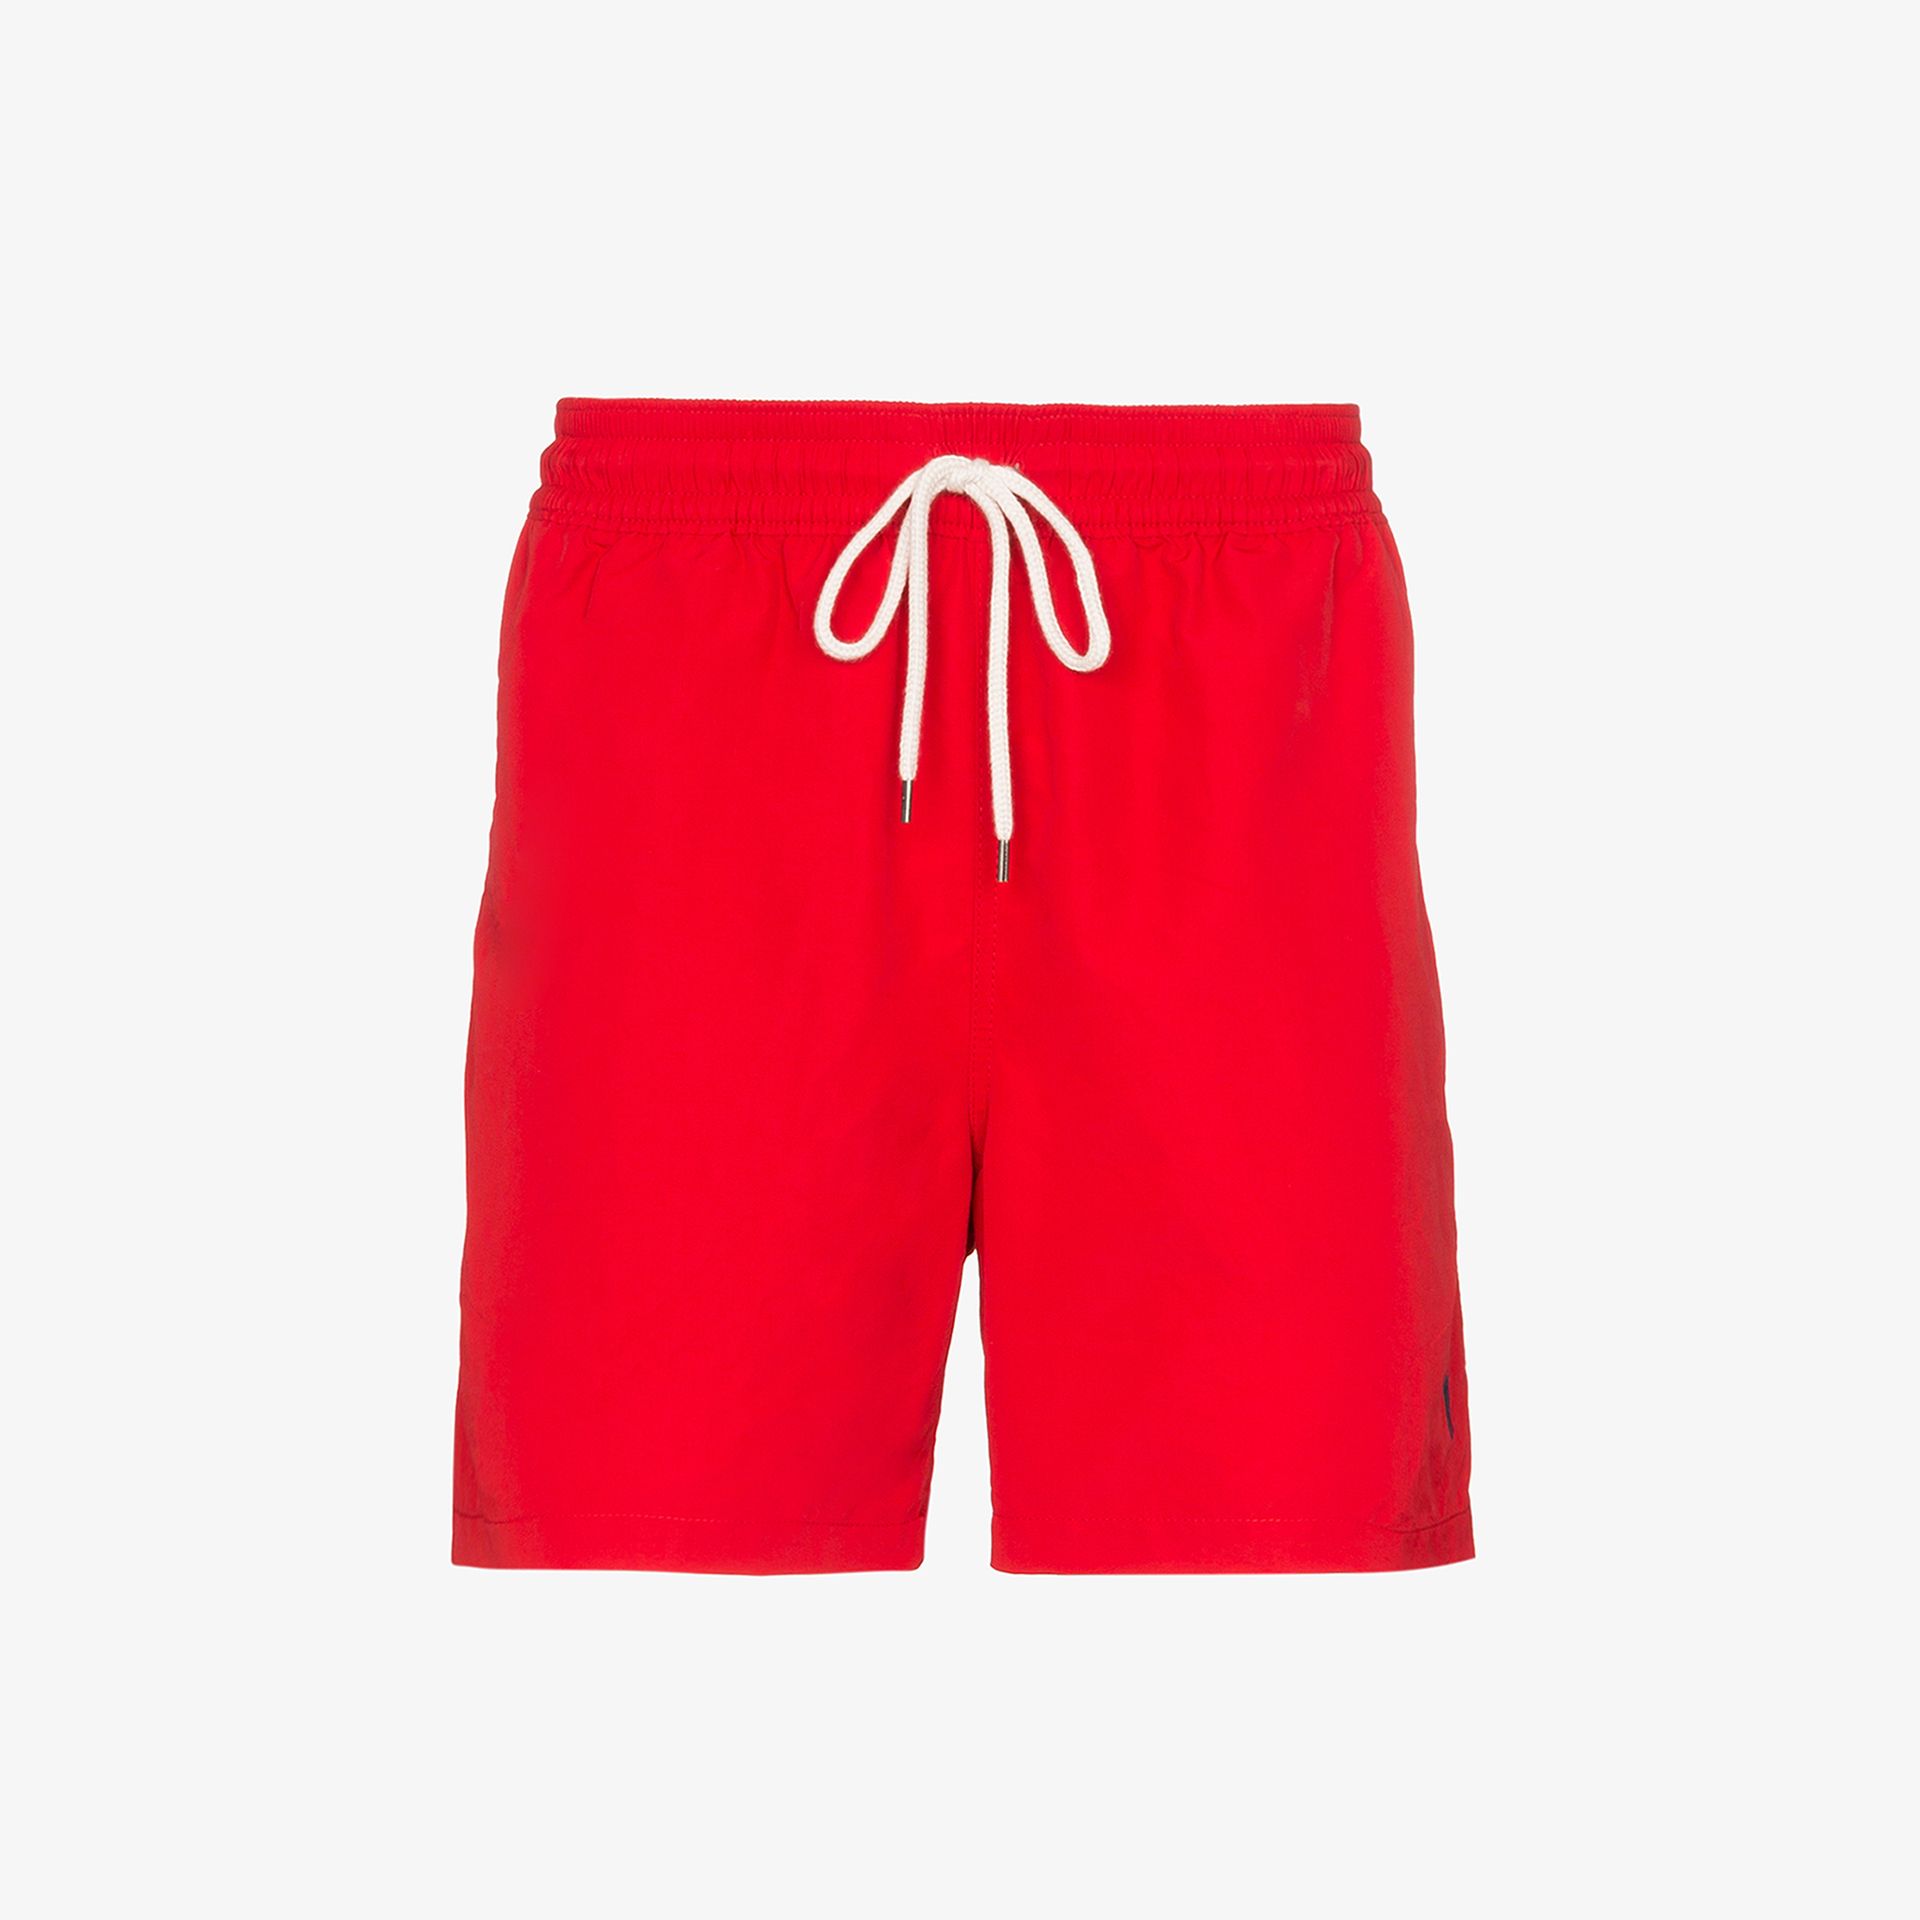 polo ralph lauren red shorts